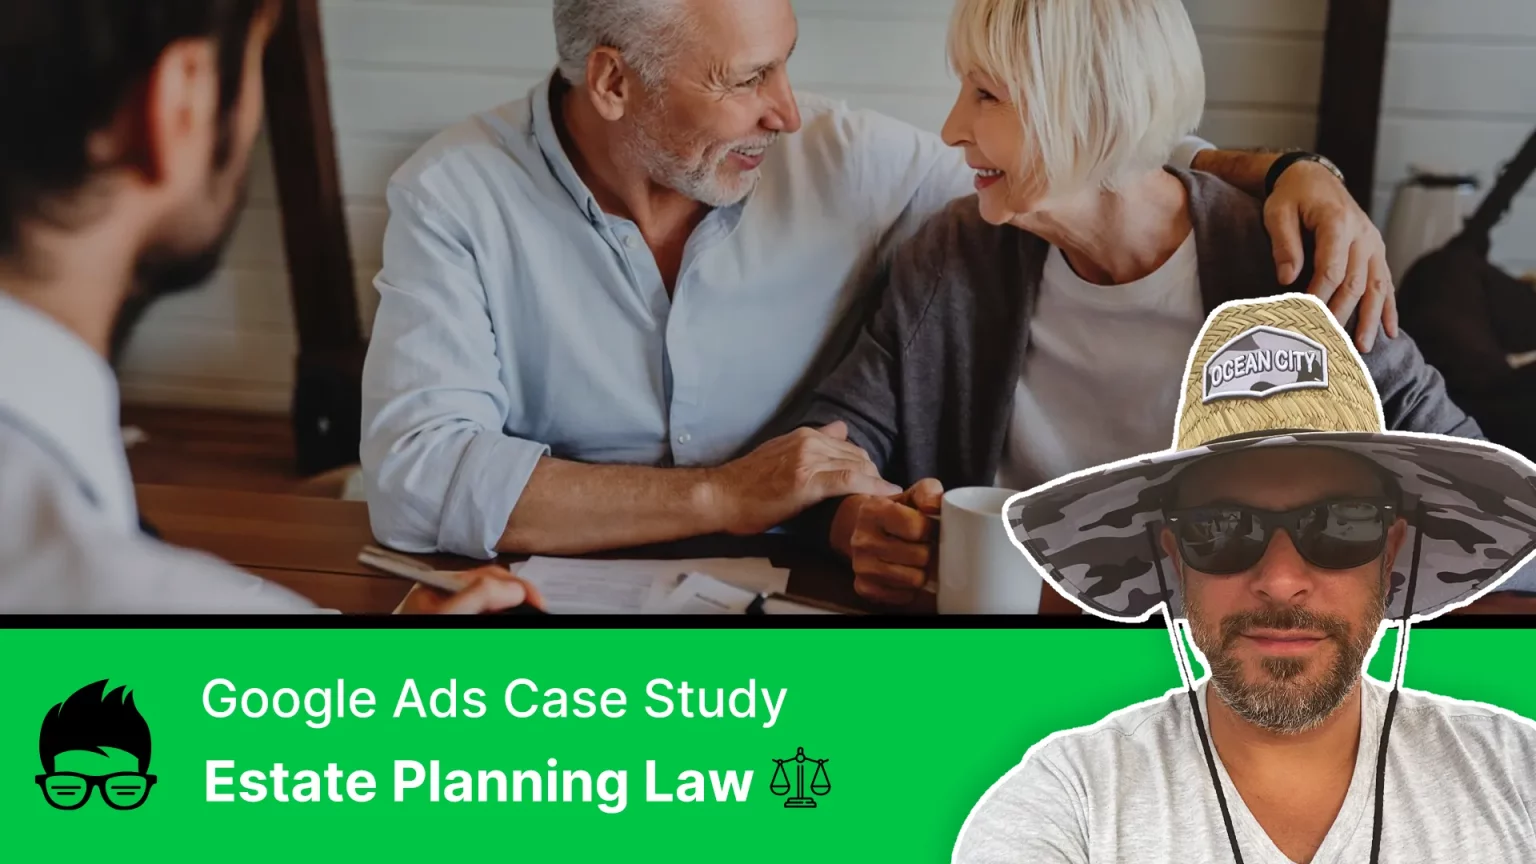 Google Ads Case Study - Estate Planning Law Google PPC Ads